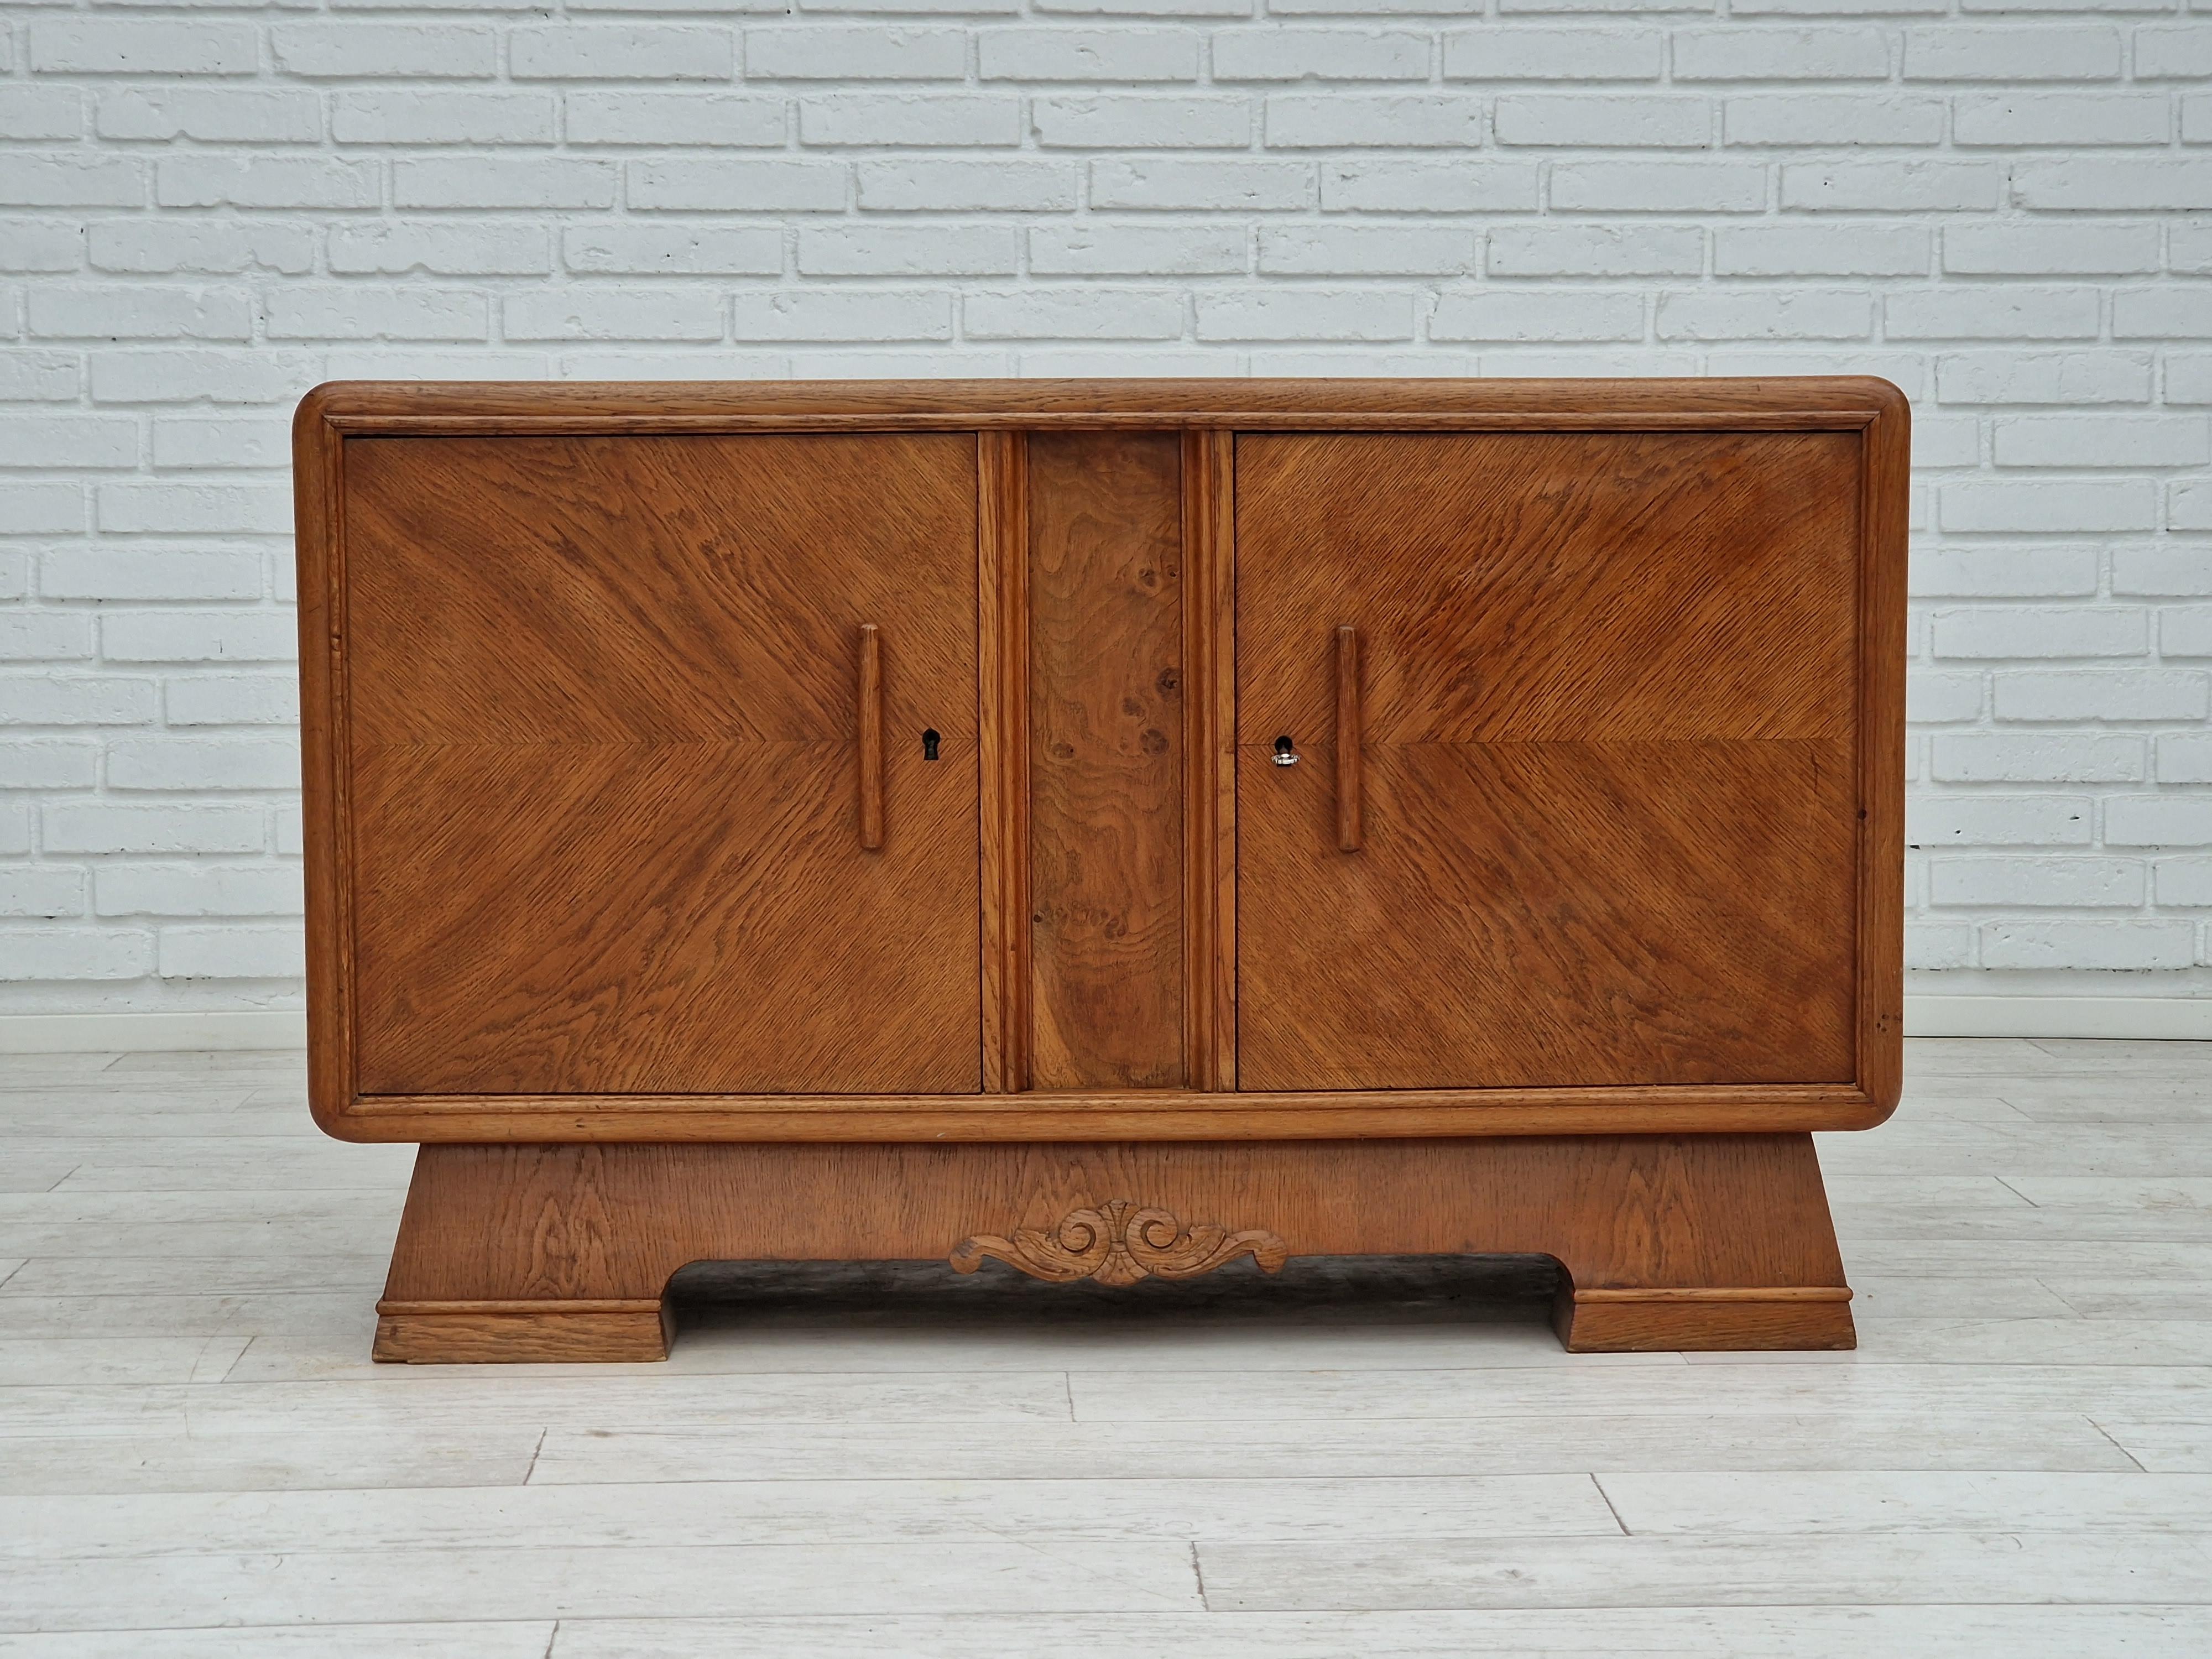 1960s, Scandinavian Art Deco Chest of Drawers, Oak Wood, Original Condition 7